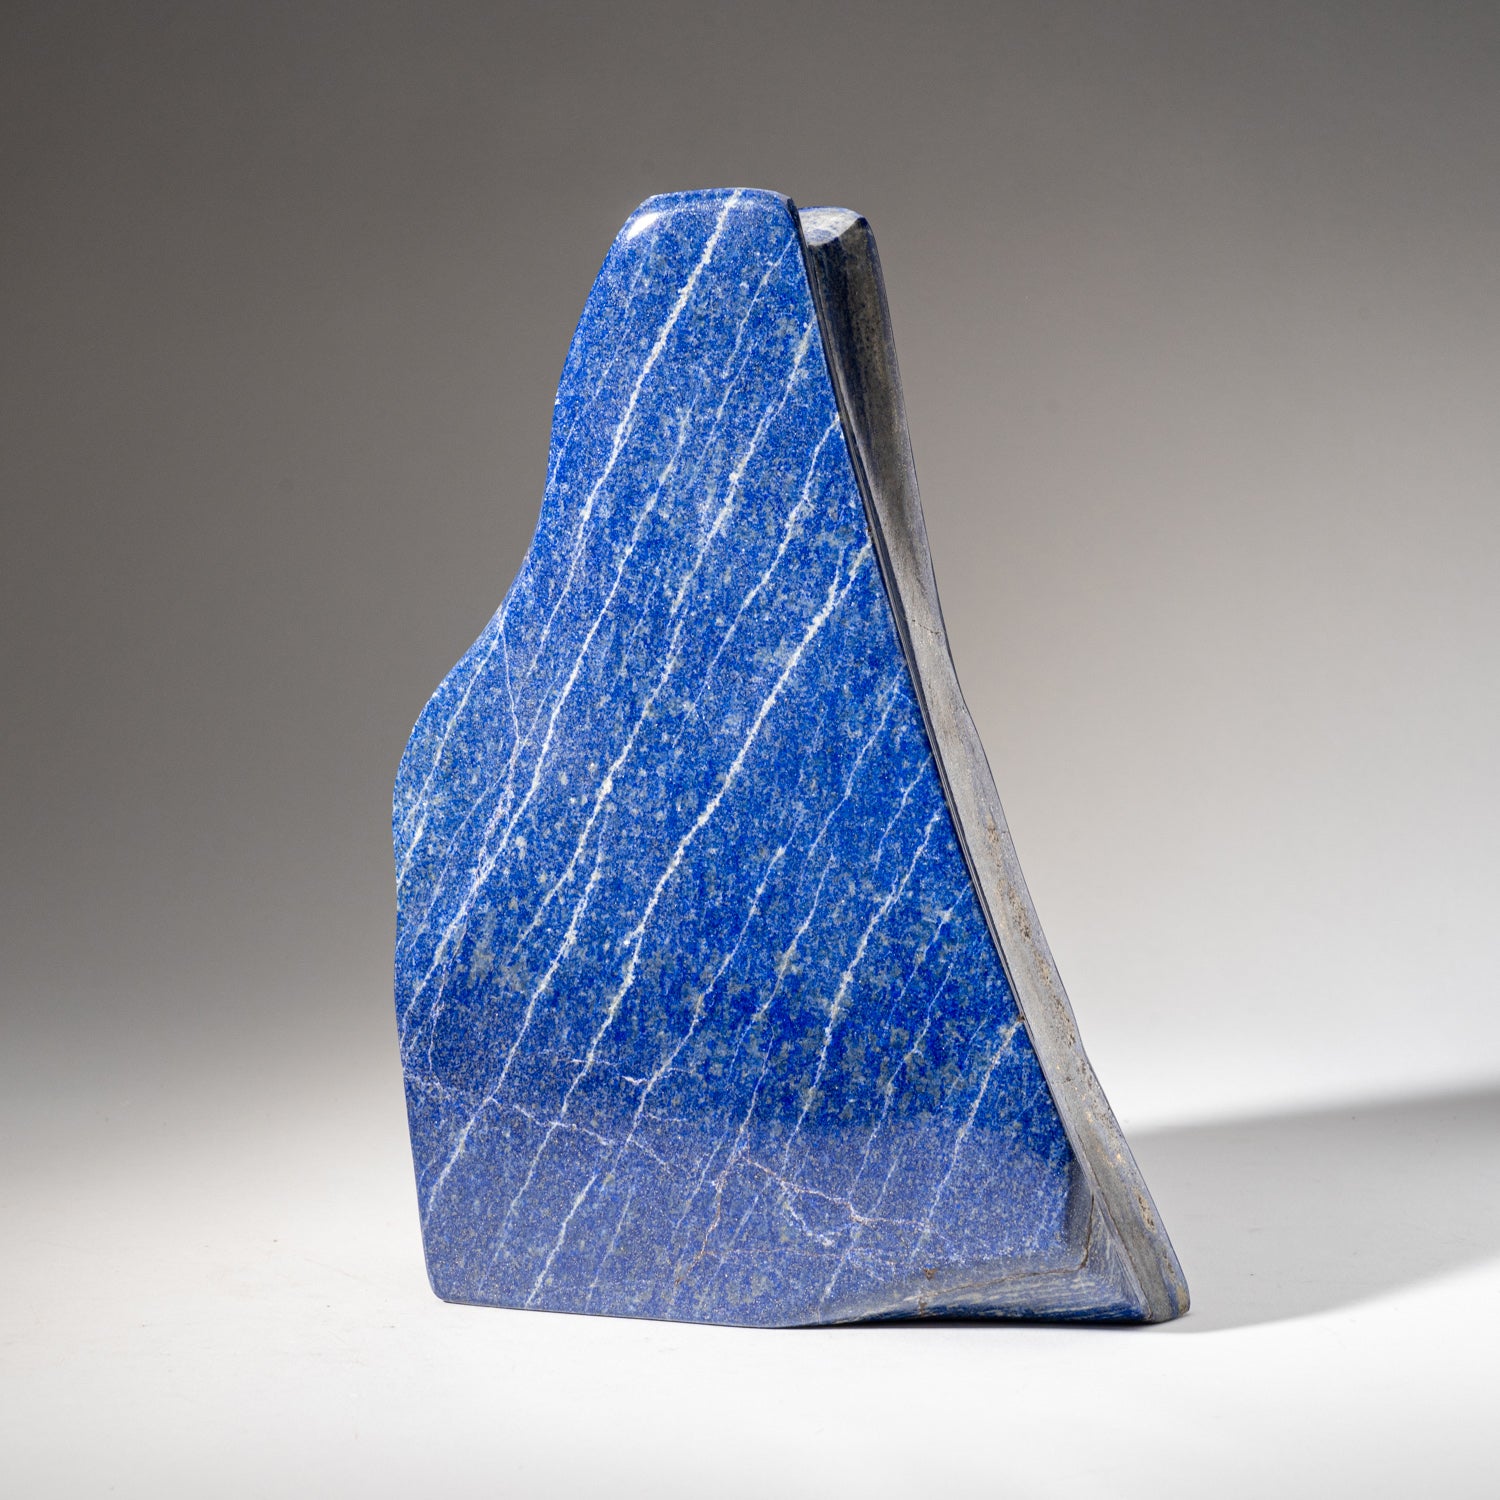 Polished Lapis Lazuli Freeform from Afghanistan (7.4 lbs)